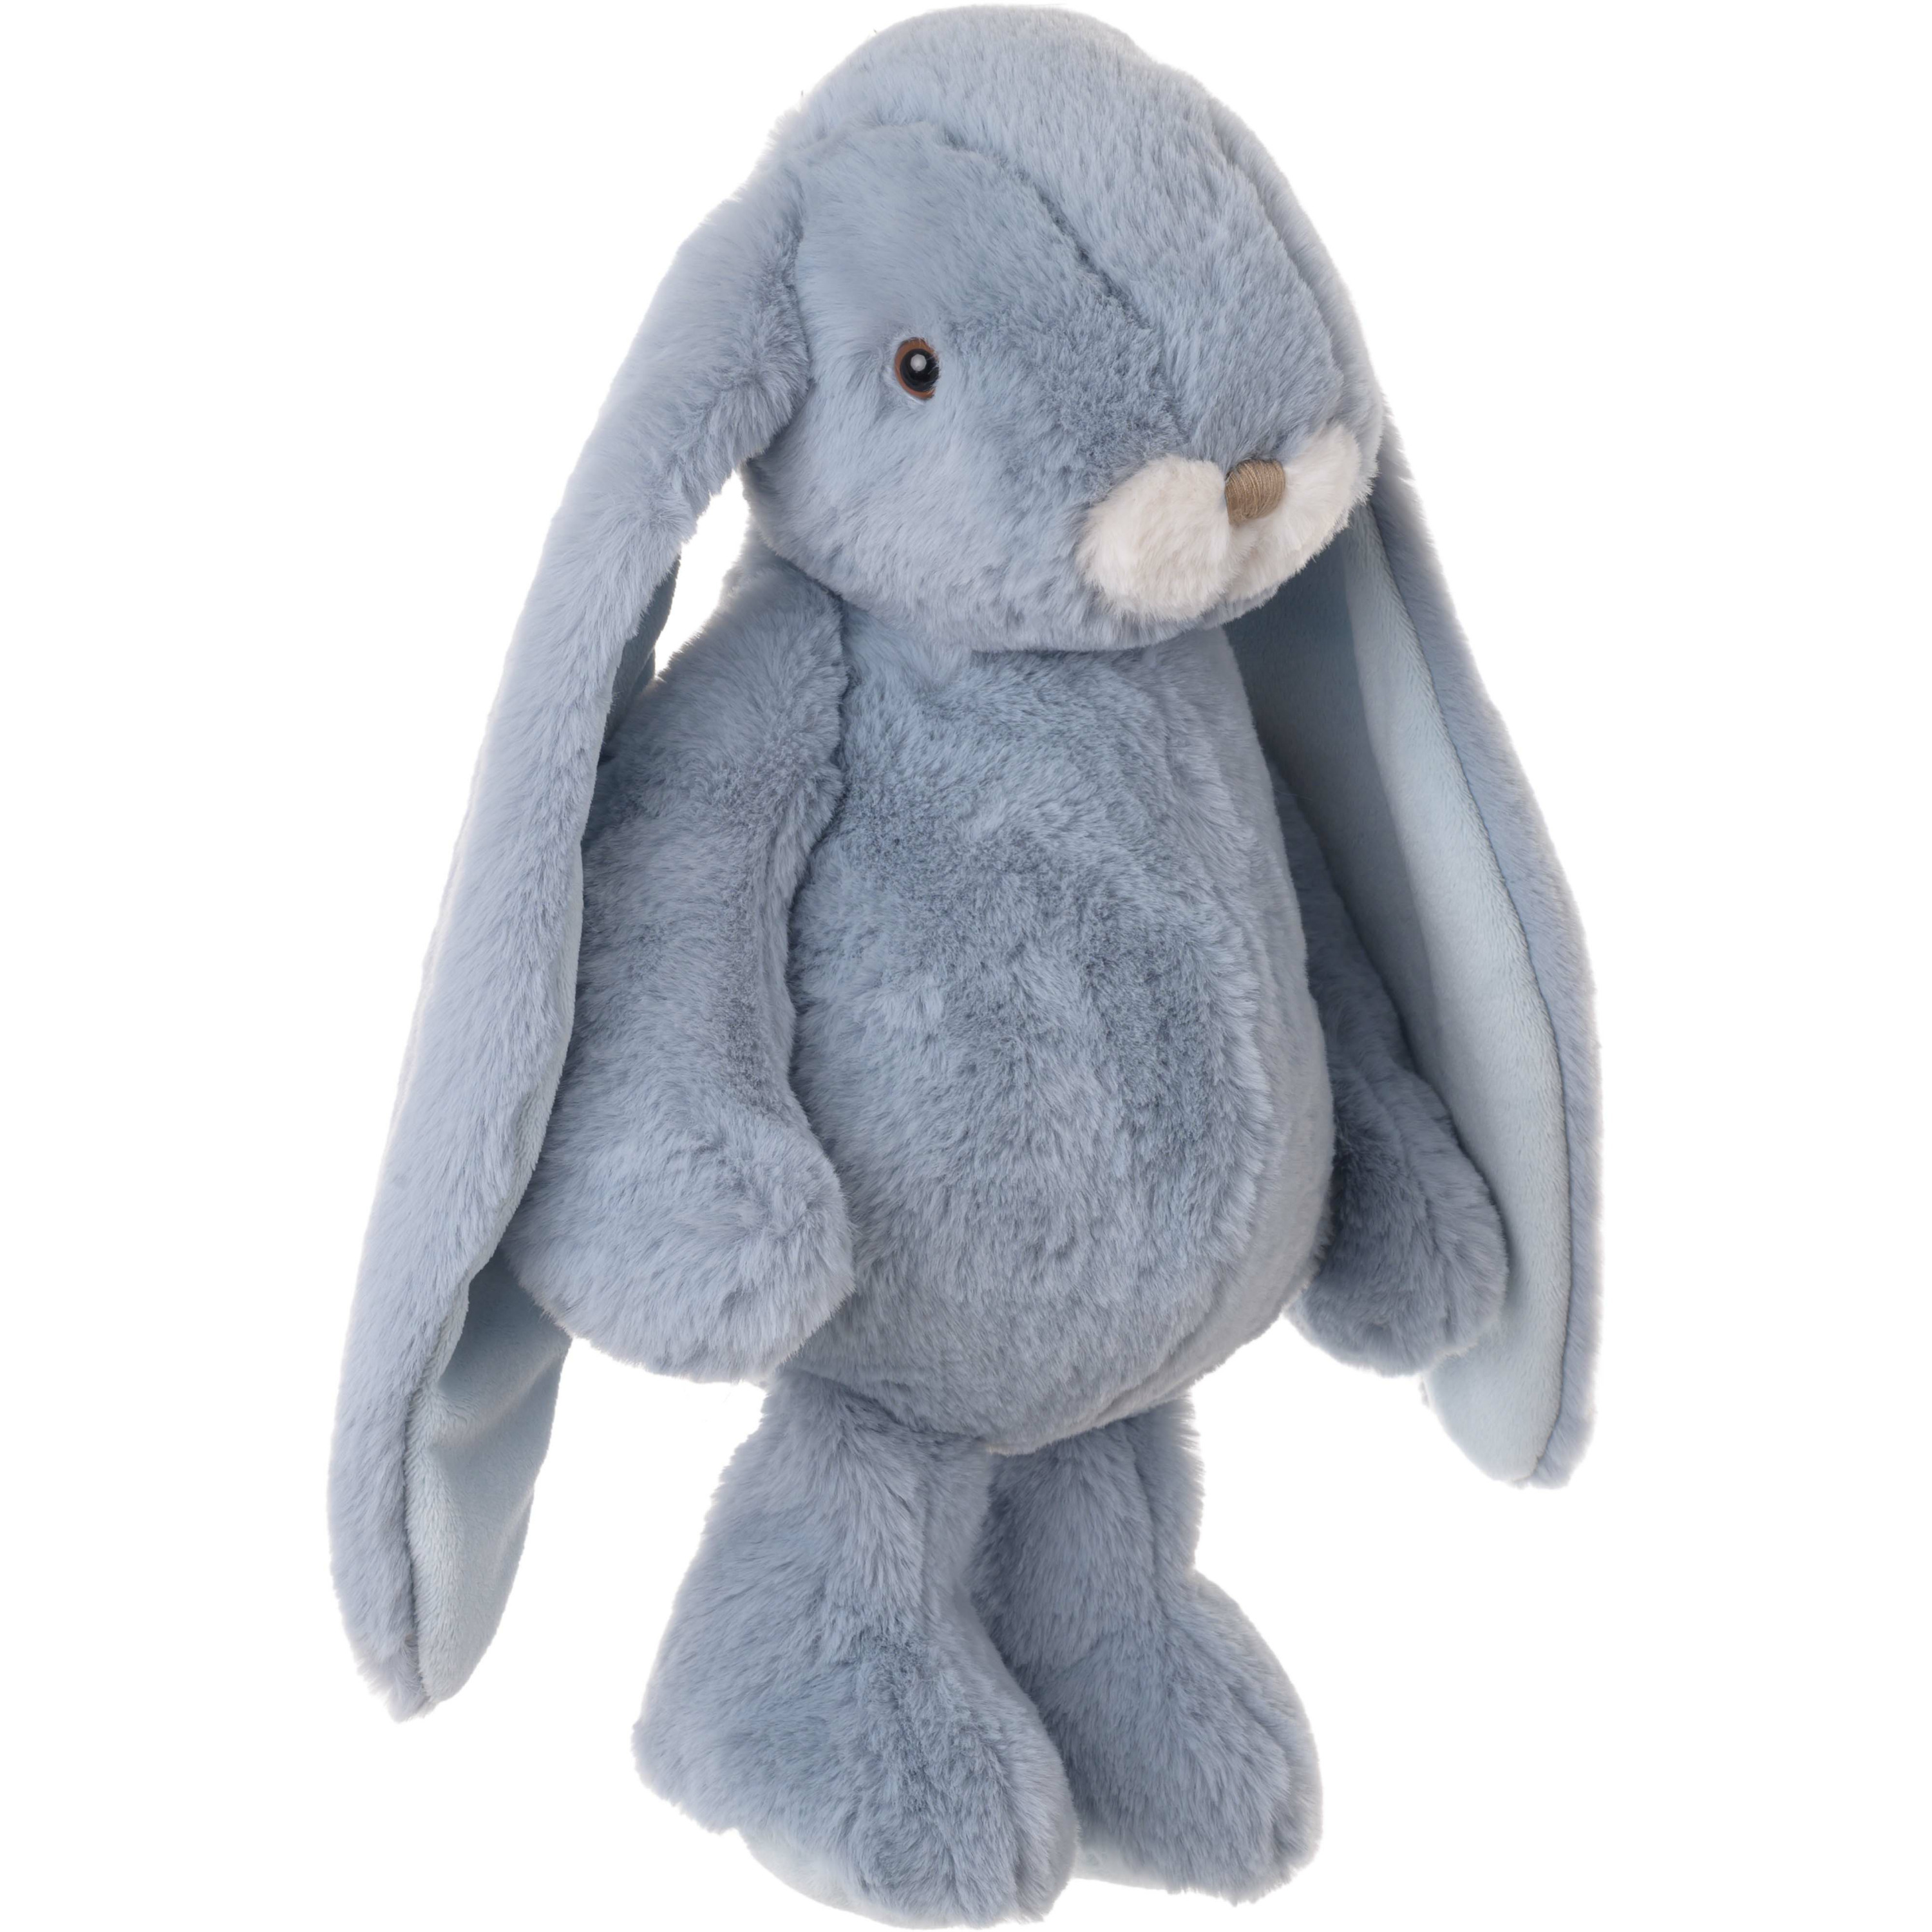 Bukowski pluche konijn knuffeldier lichtblauw staand 40 cm luxe knuffels